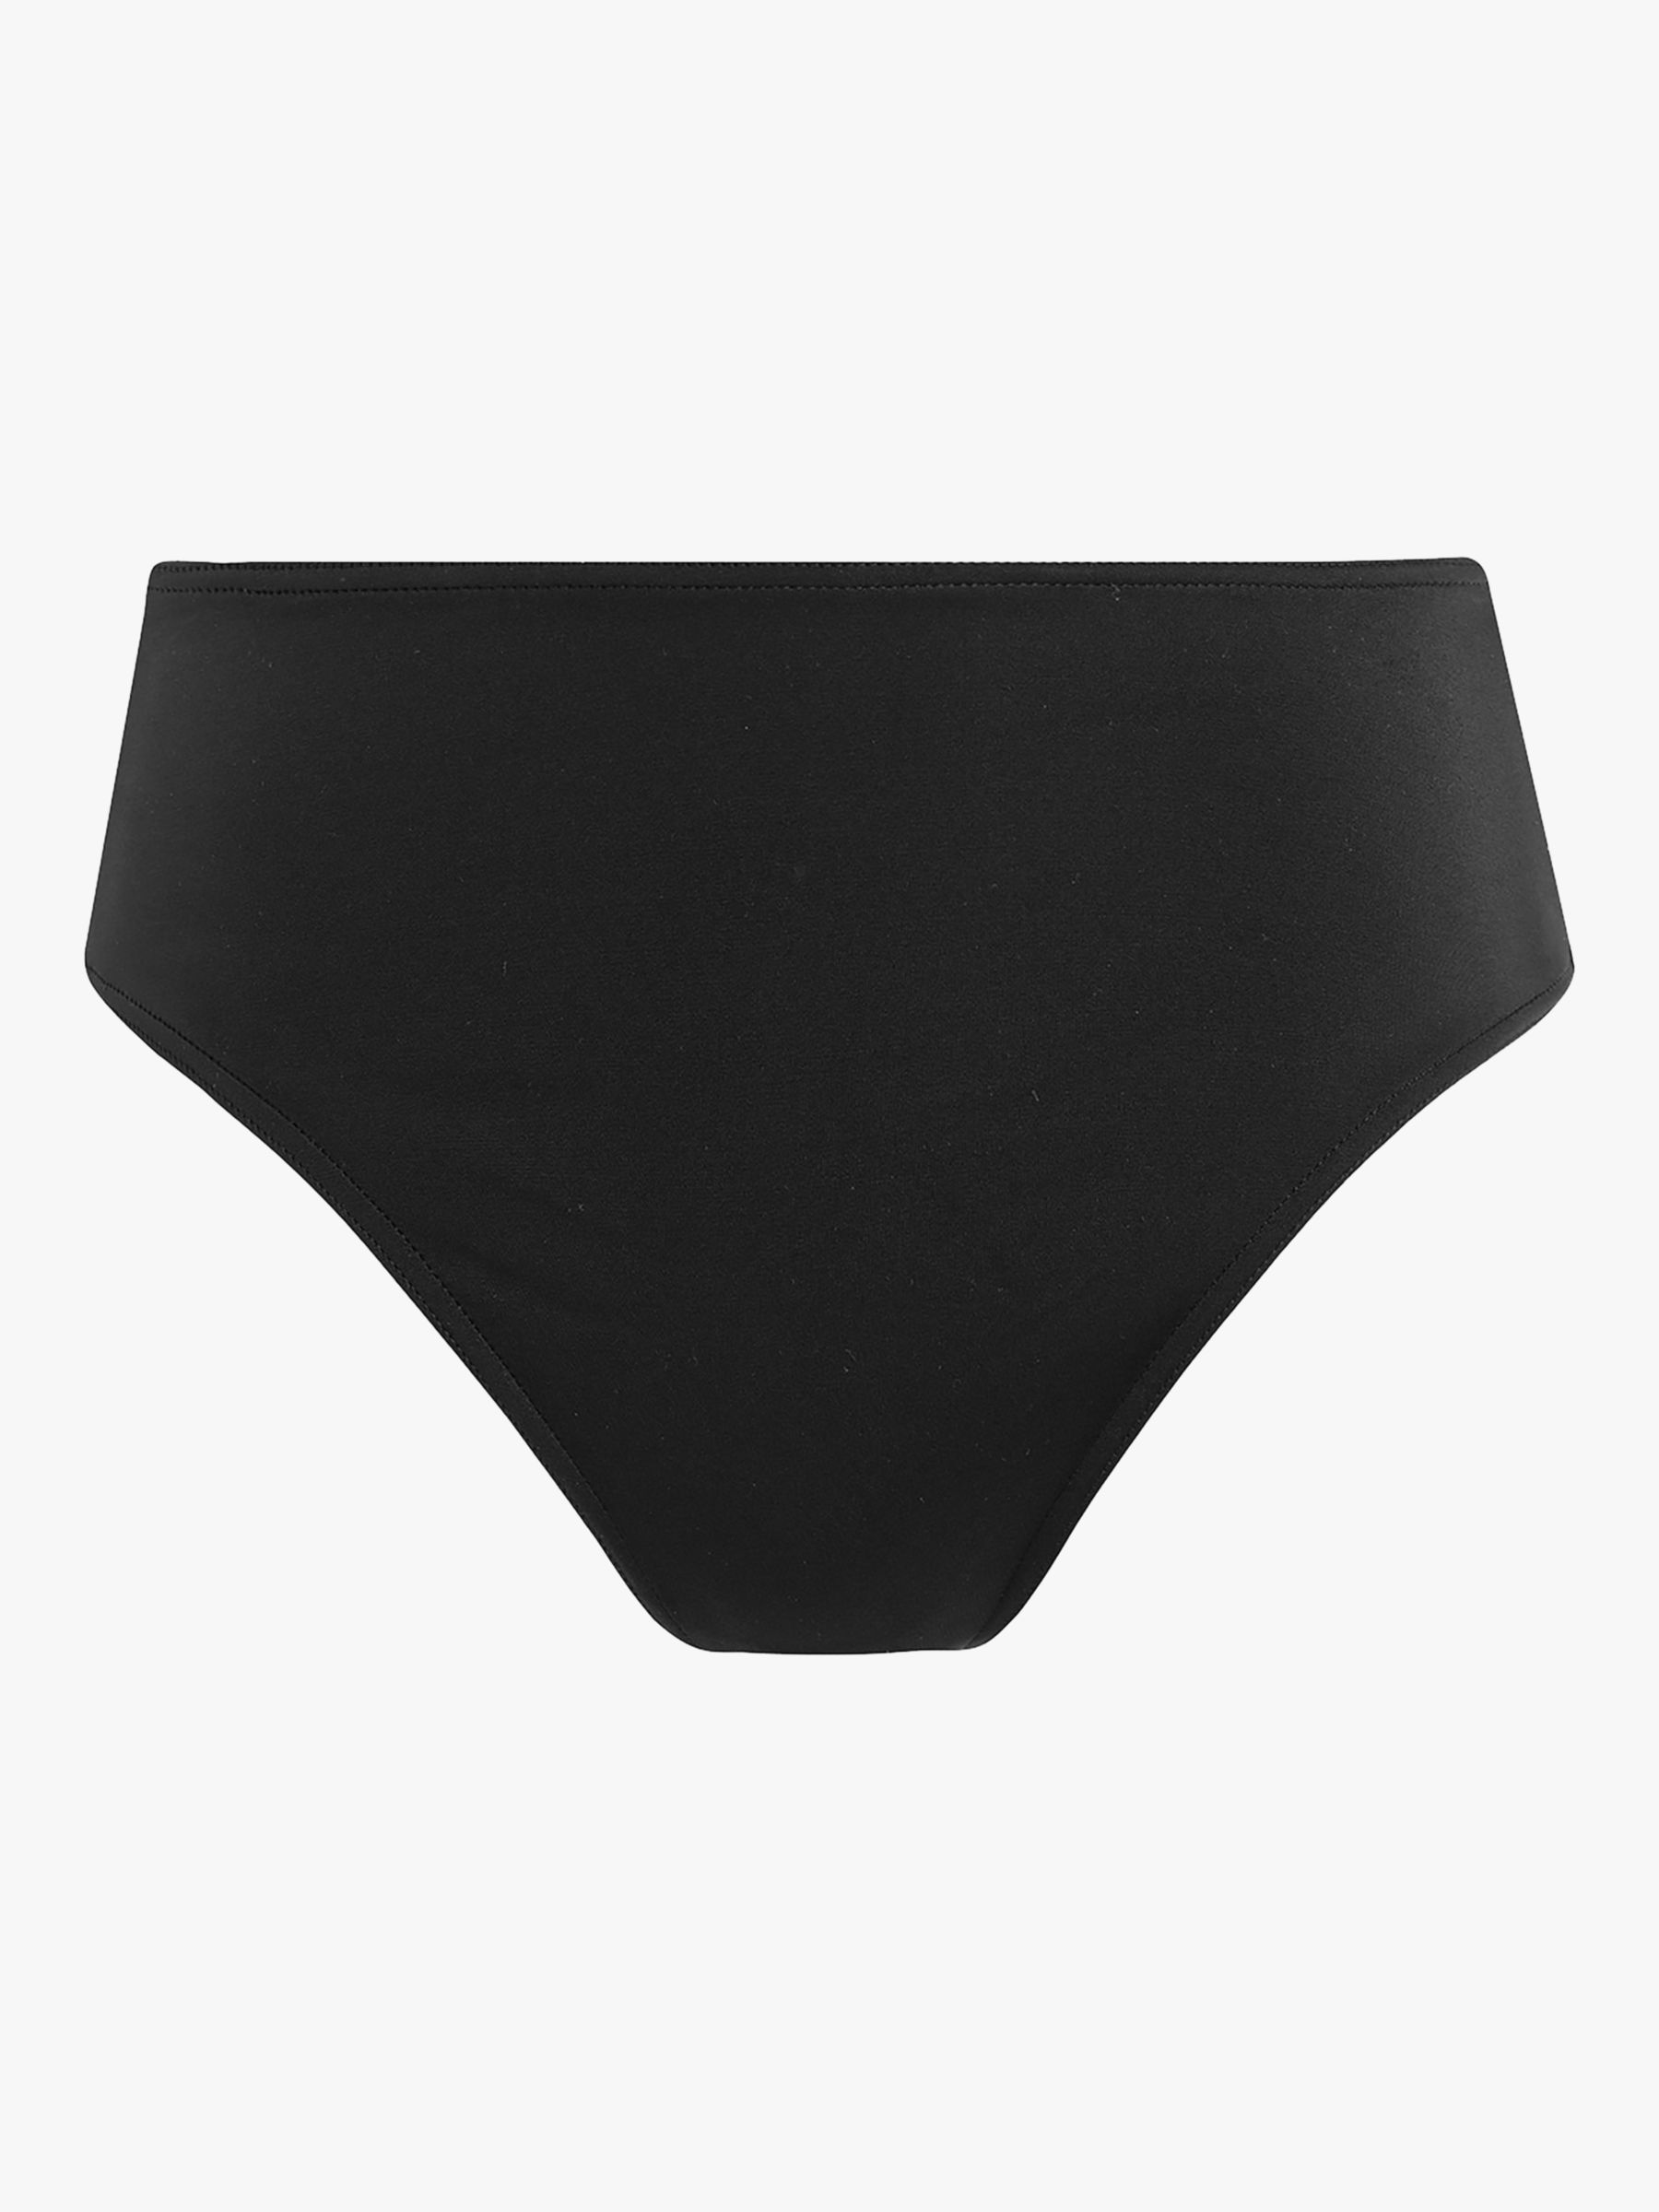 Freya Jewel Cove Plain High Waist Bikini Bottoms, Black, S